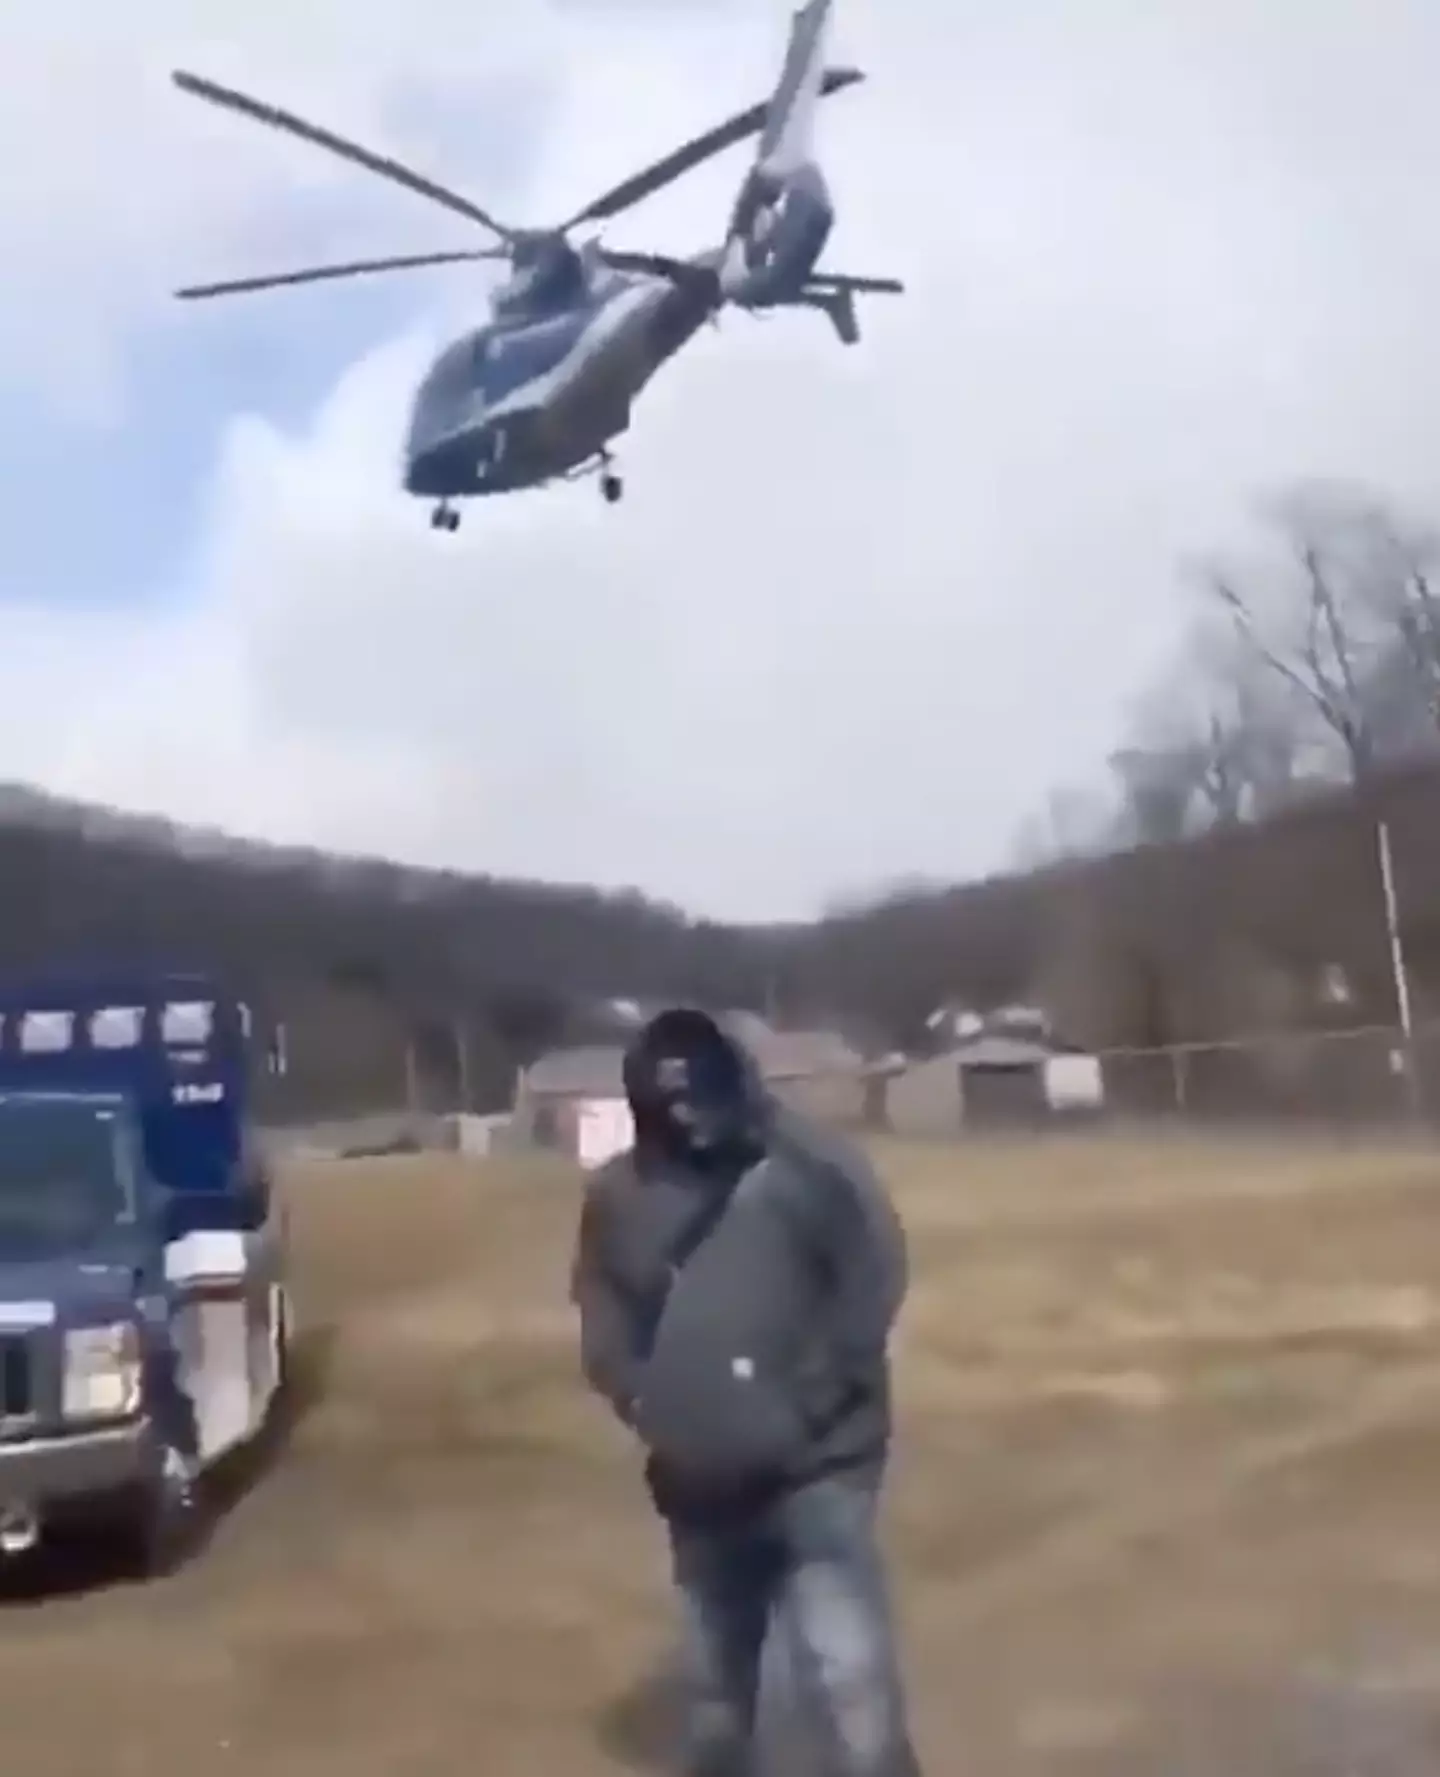 The chopper experiences a perfect camera illusion.